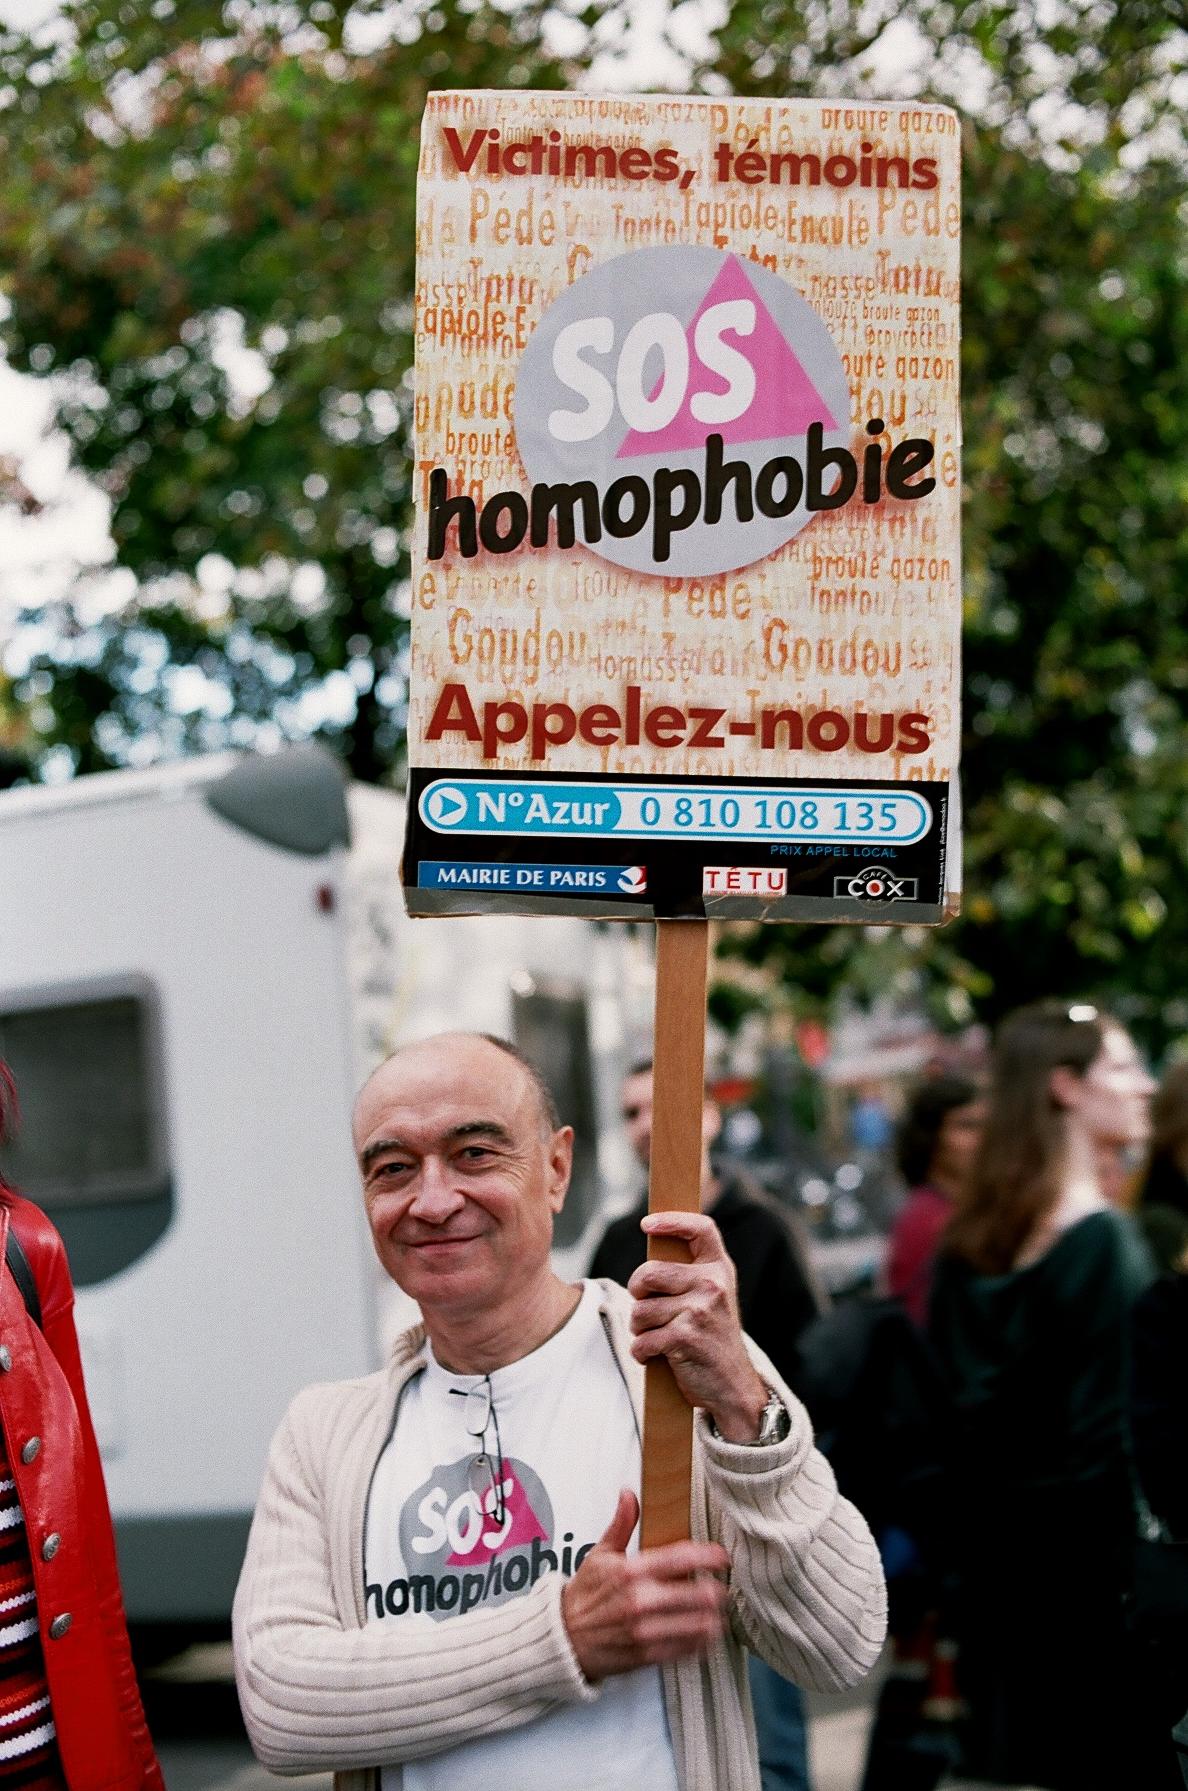 SOS_Homophobie heteroclite juin 2014 copyright Kenji-Baptiste Oikawa